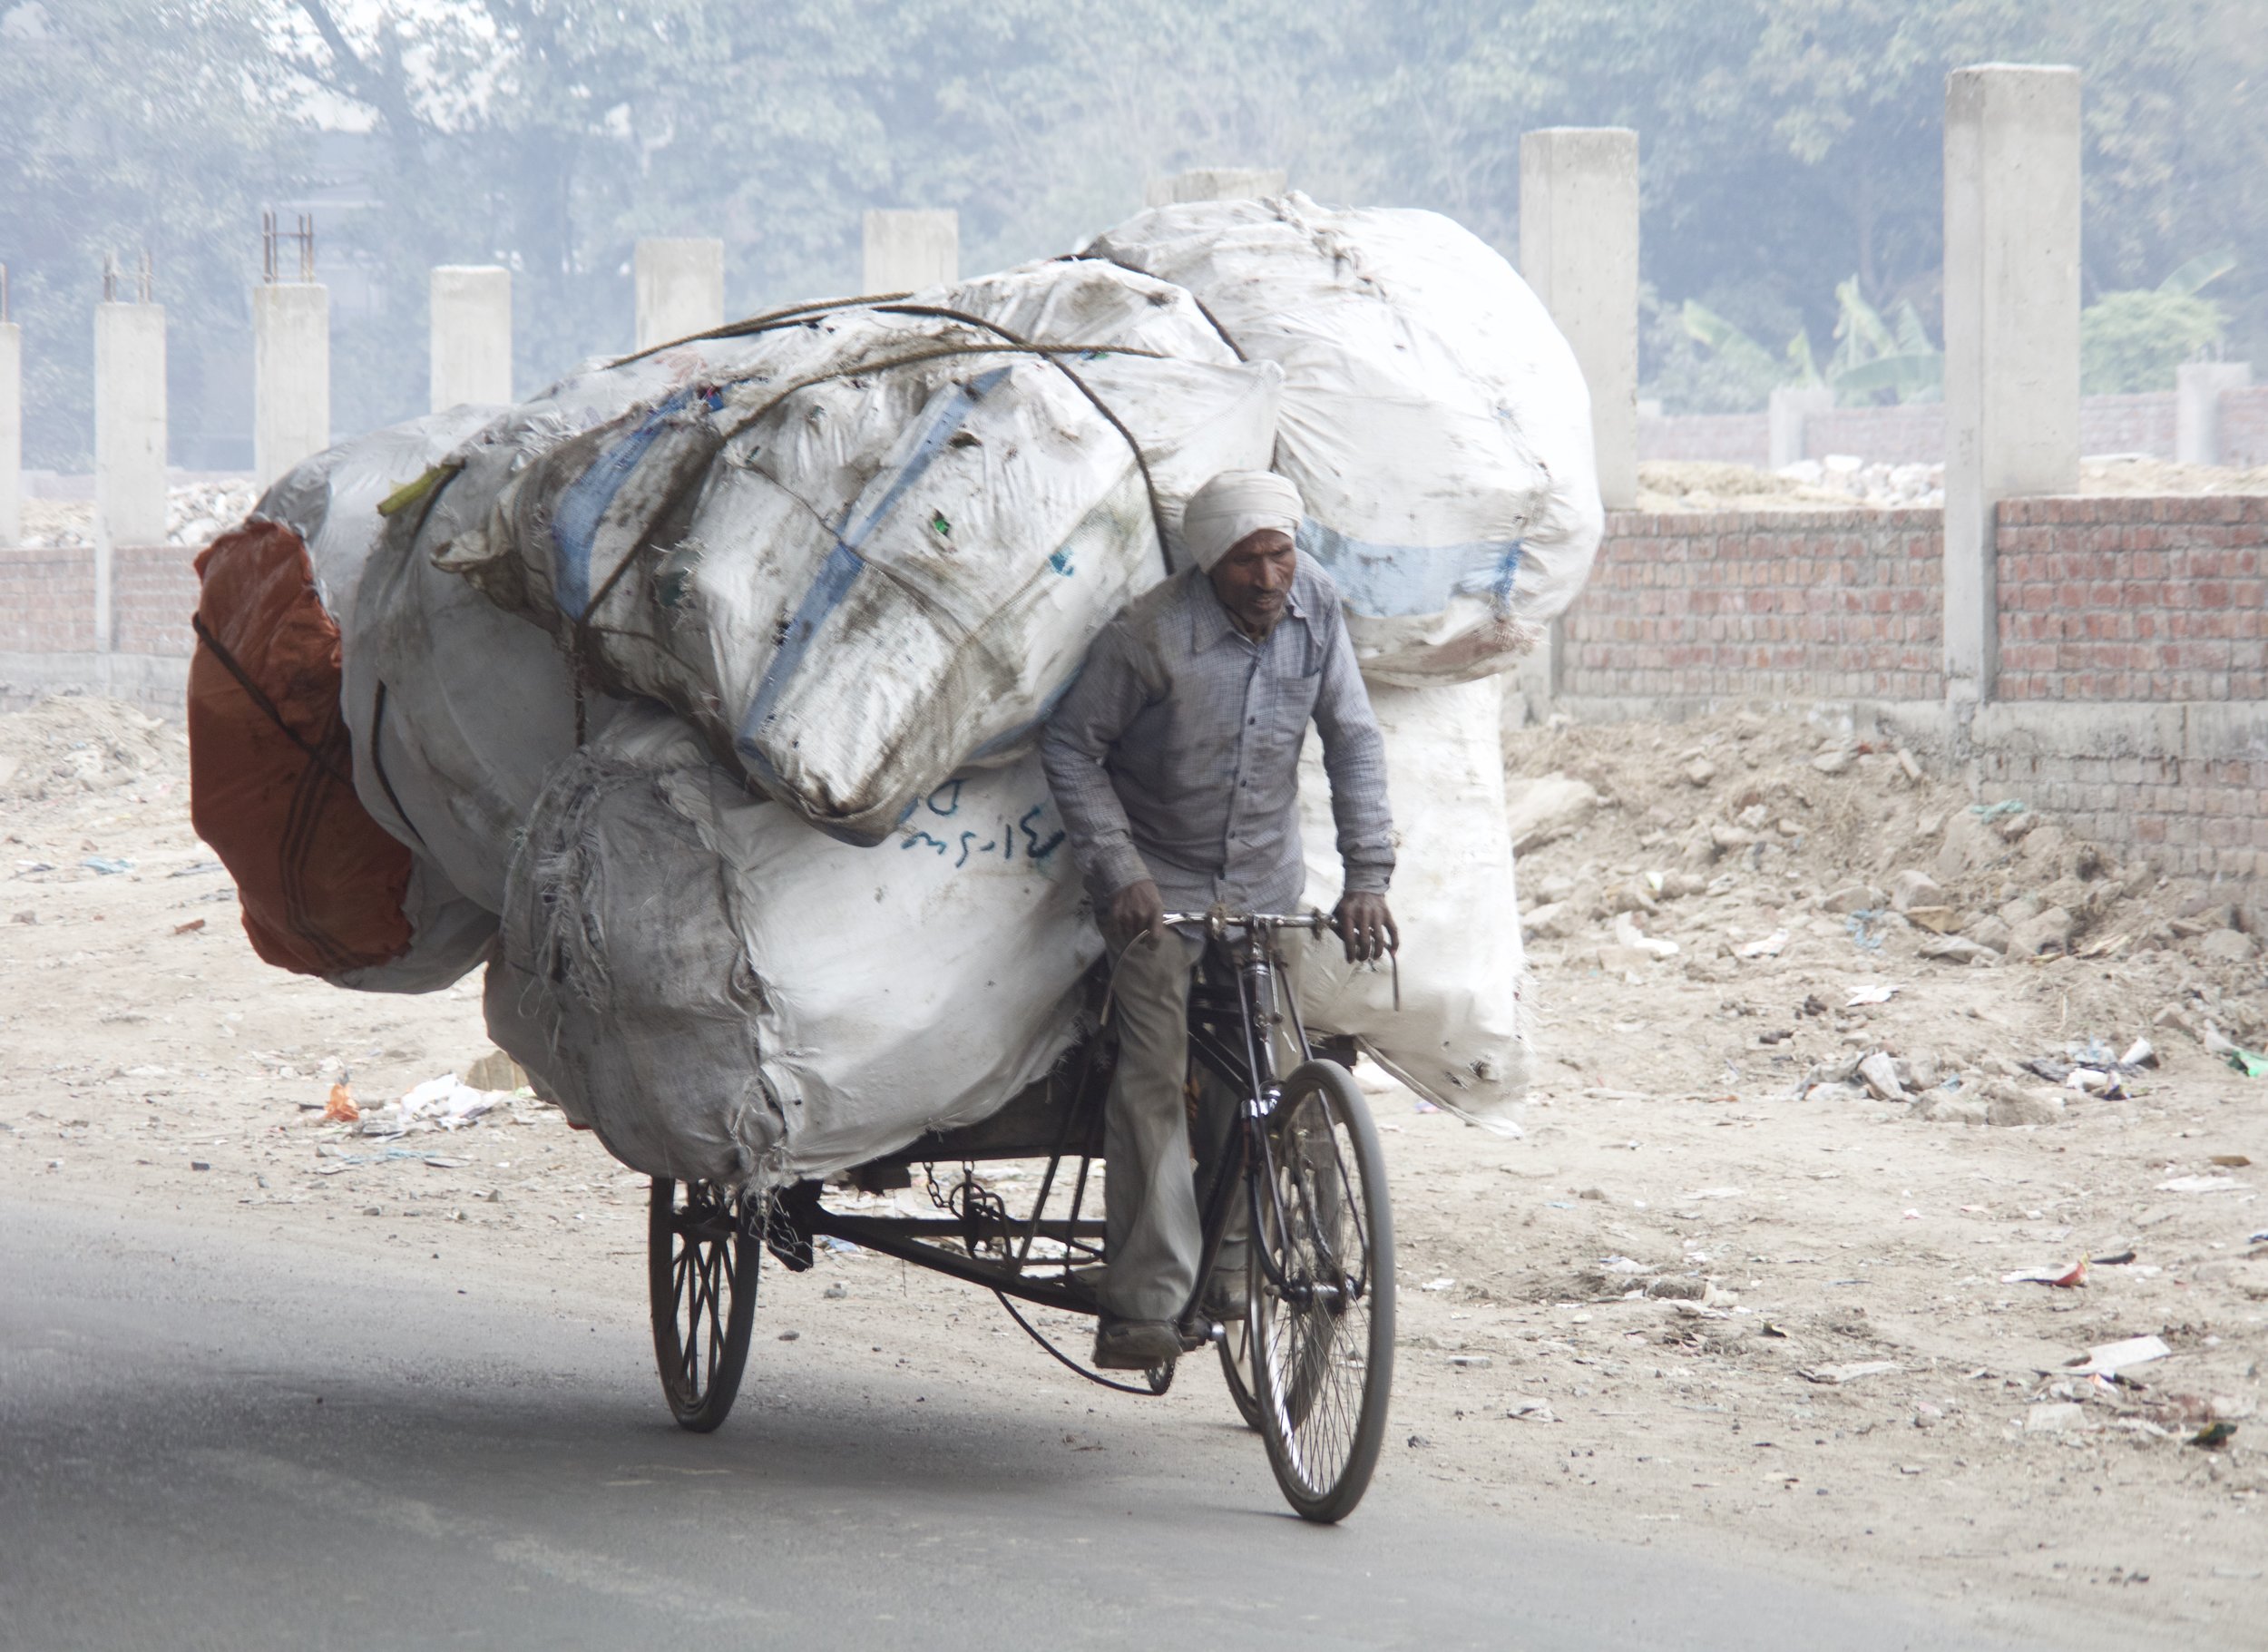 Transport worker, Amritsar, India